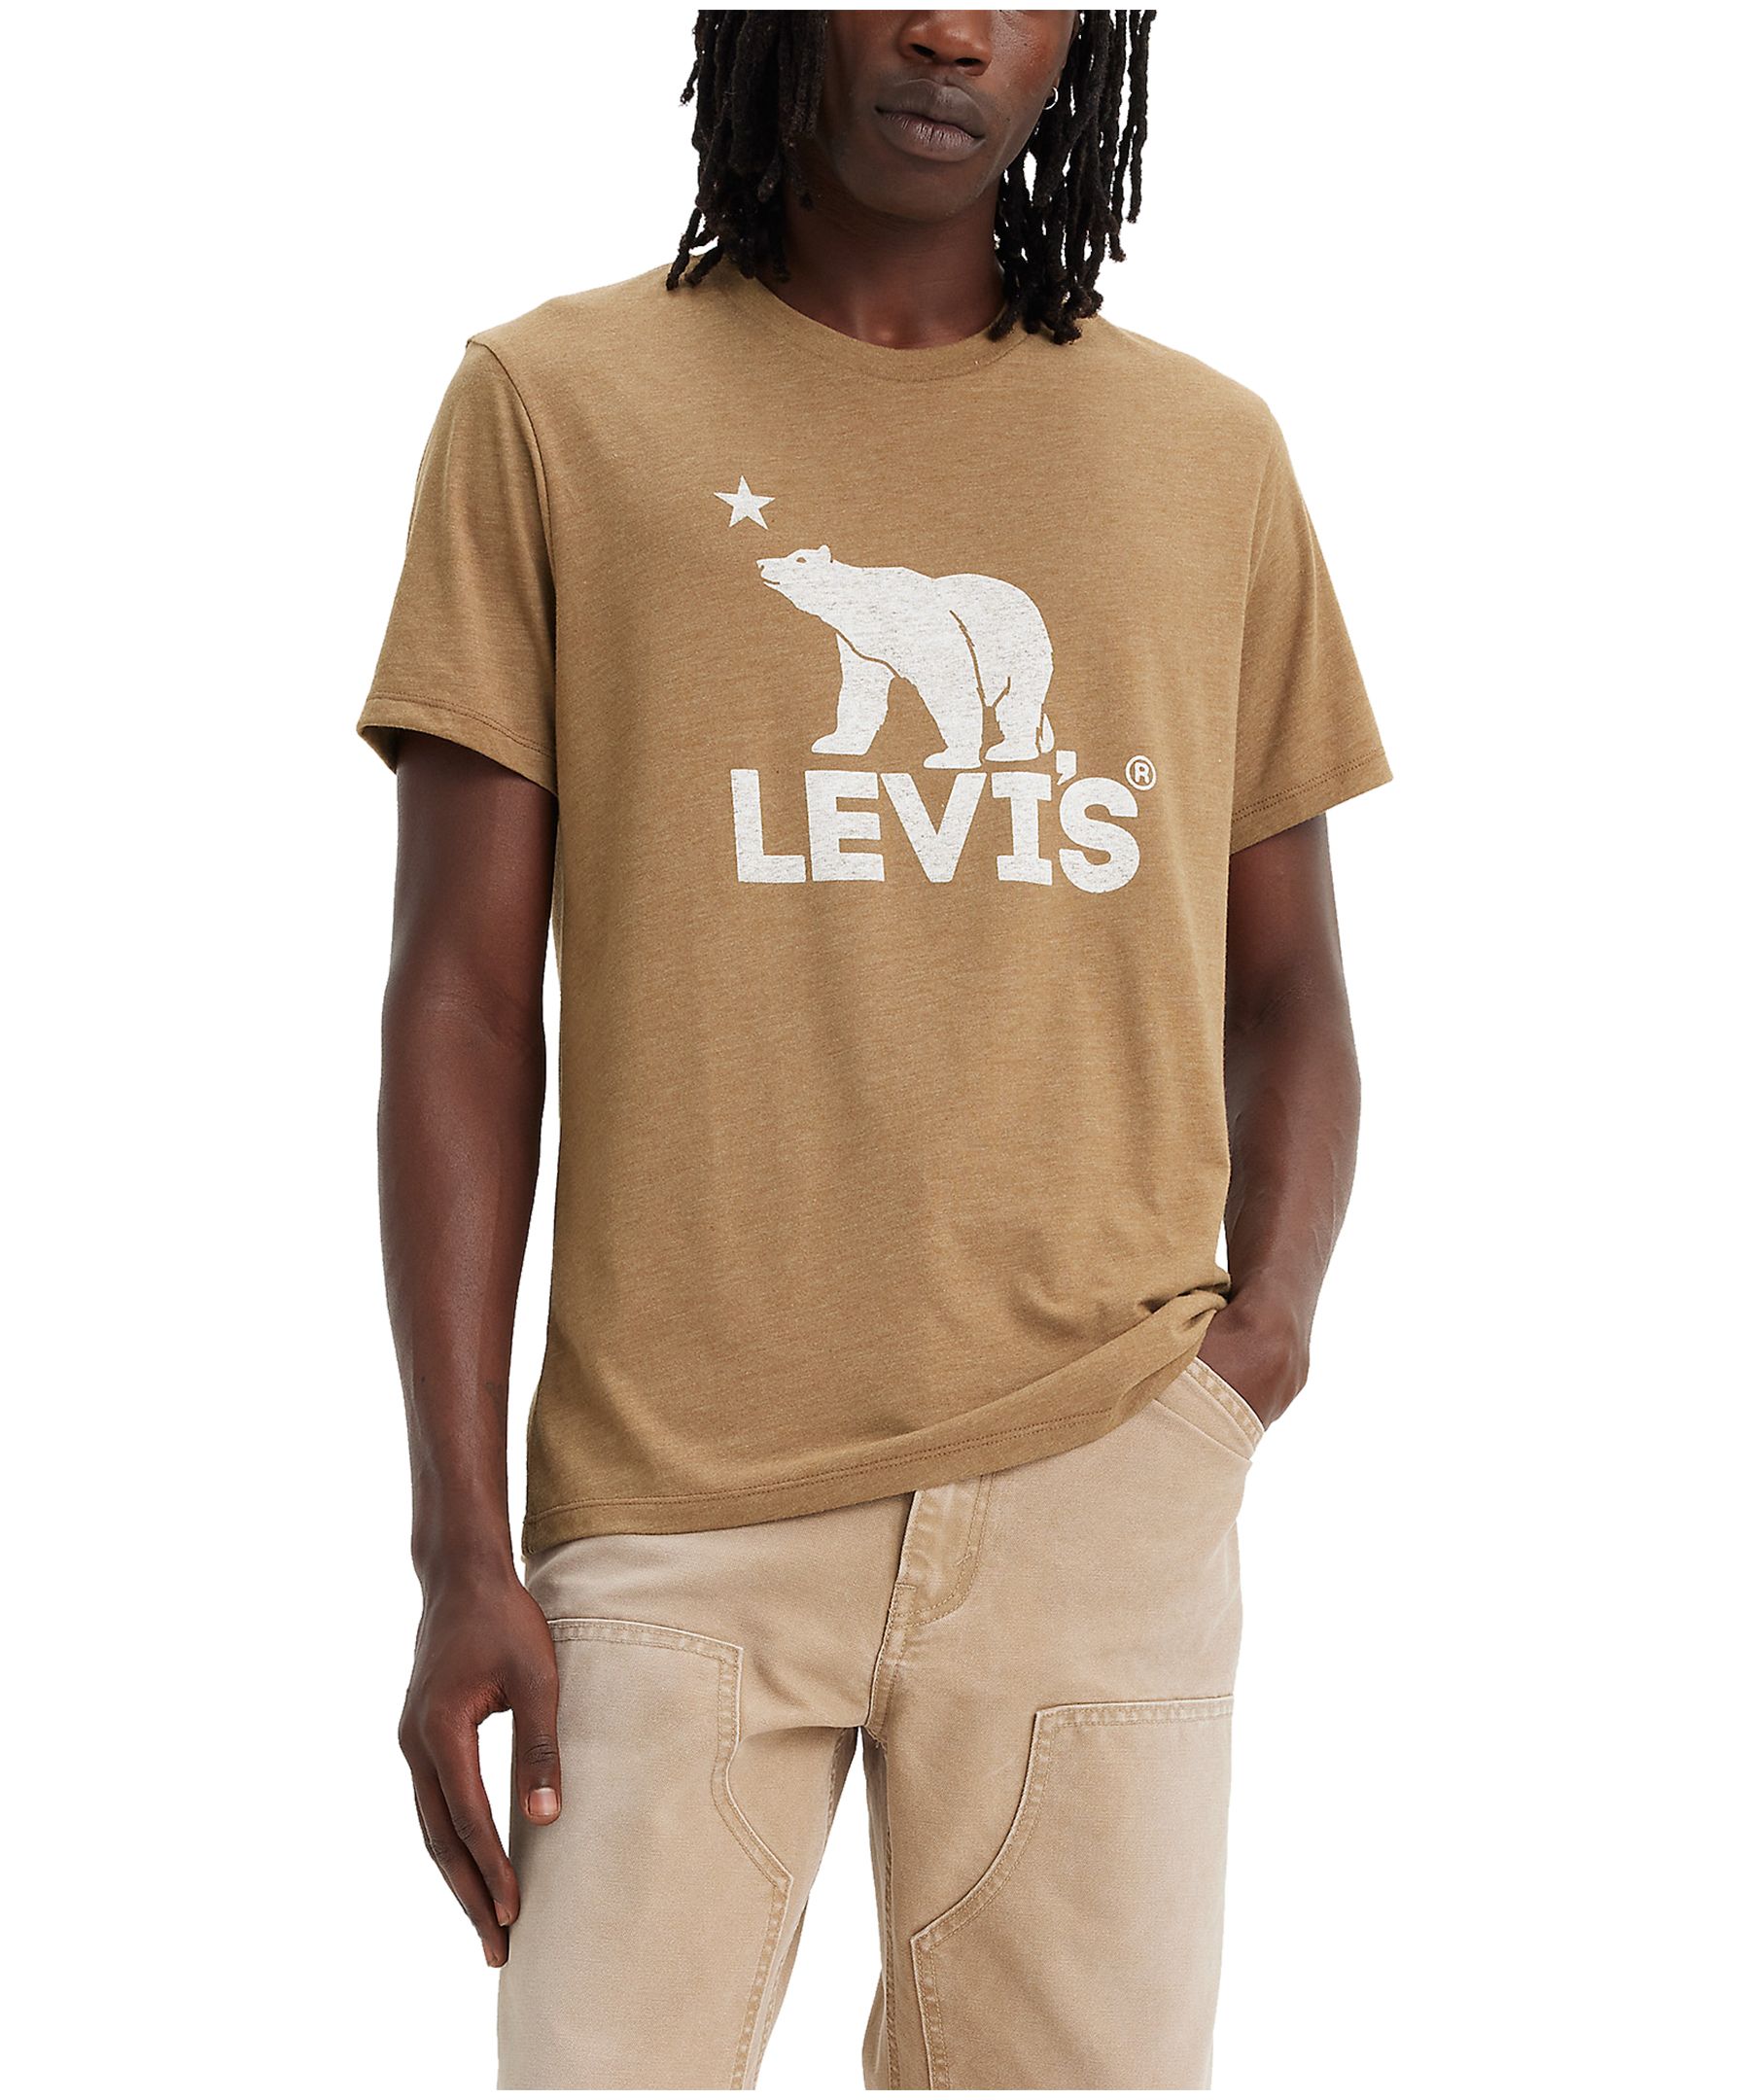 Mark's has Levi's Men's Tri-Blend Bear Graphic T Shirt